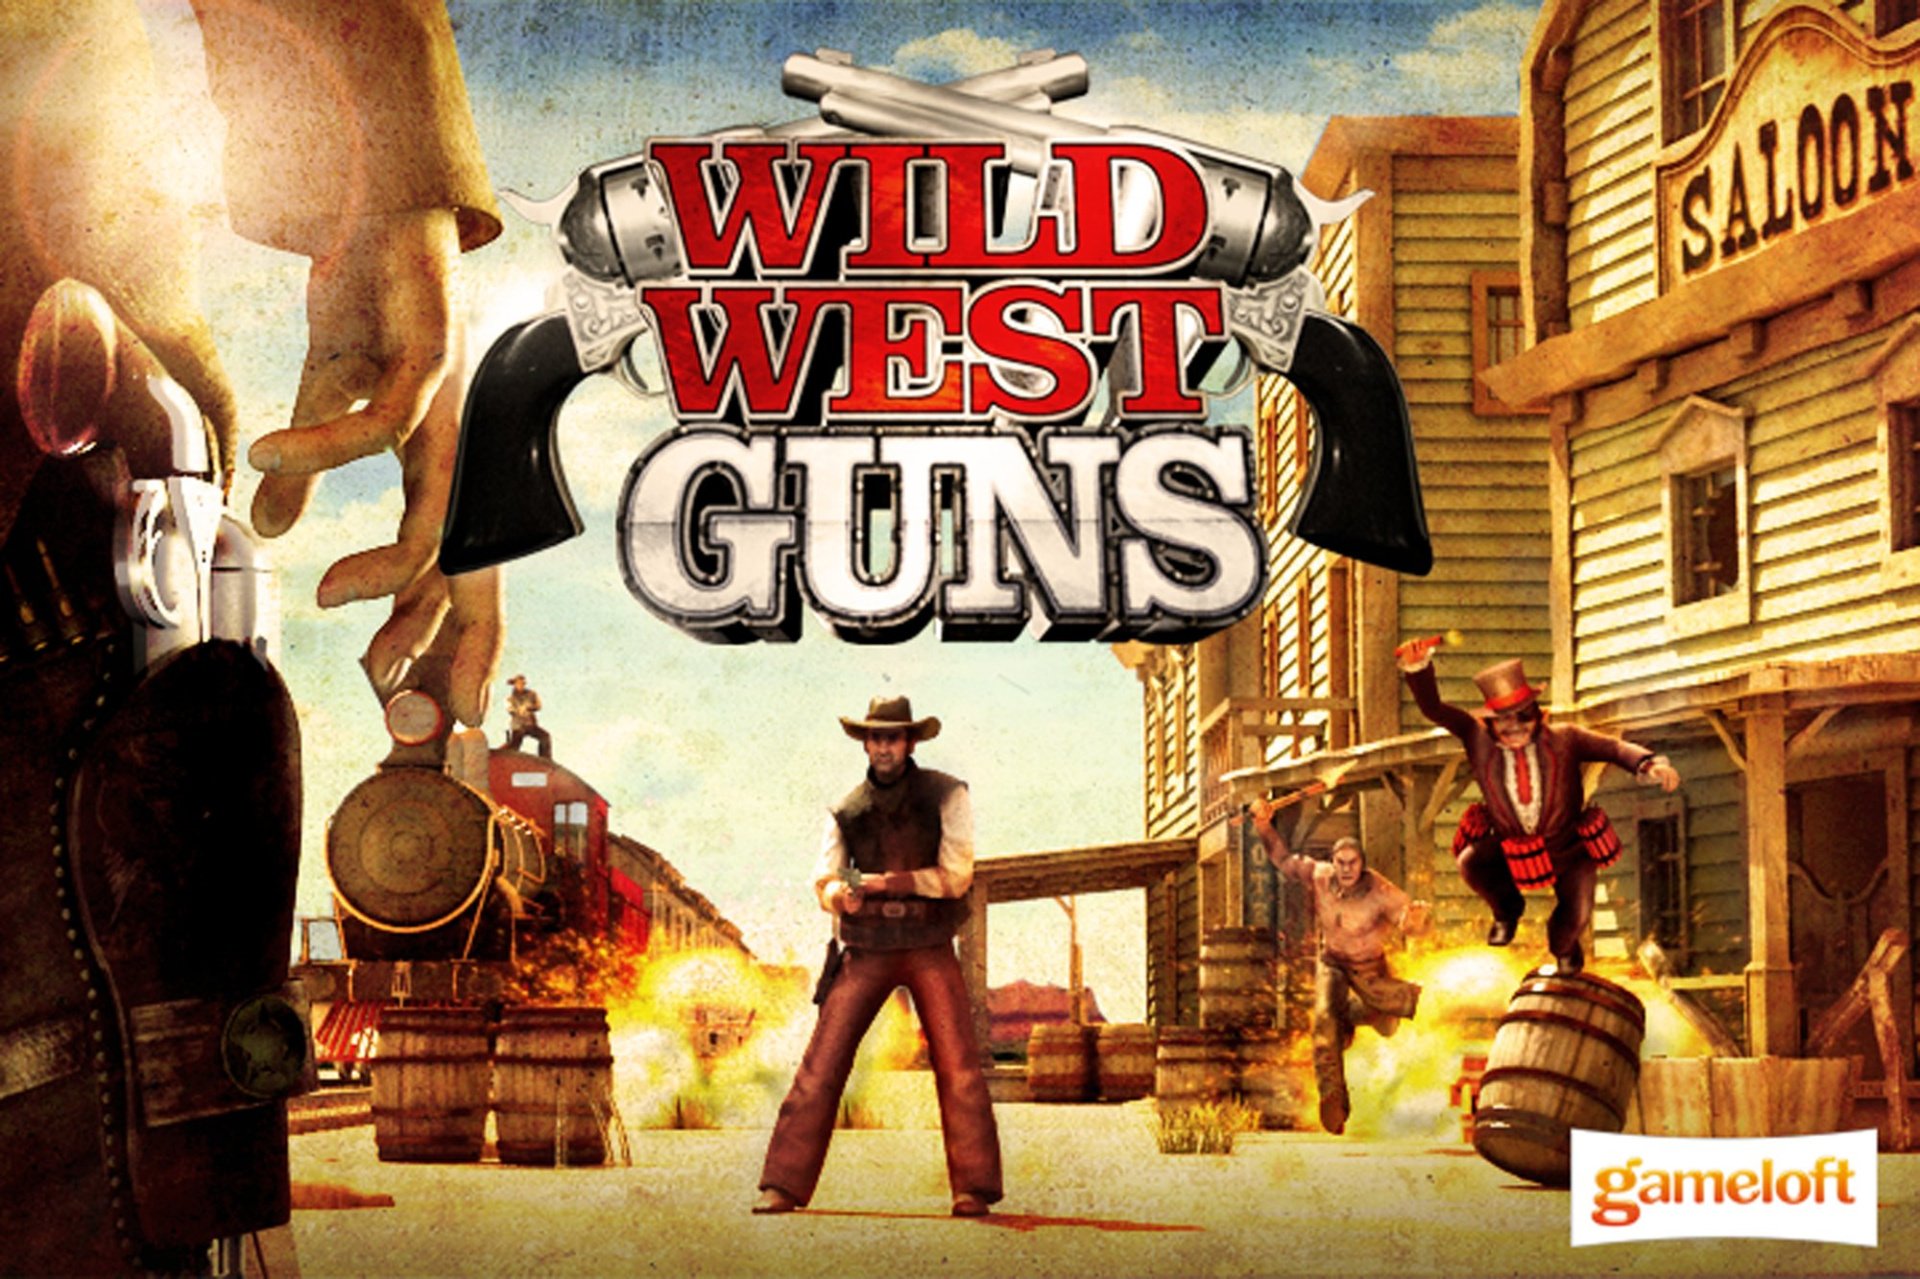 Phred From Wild West Guns